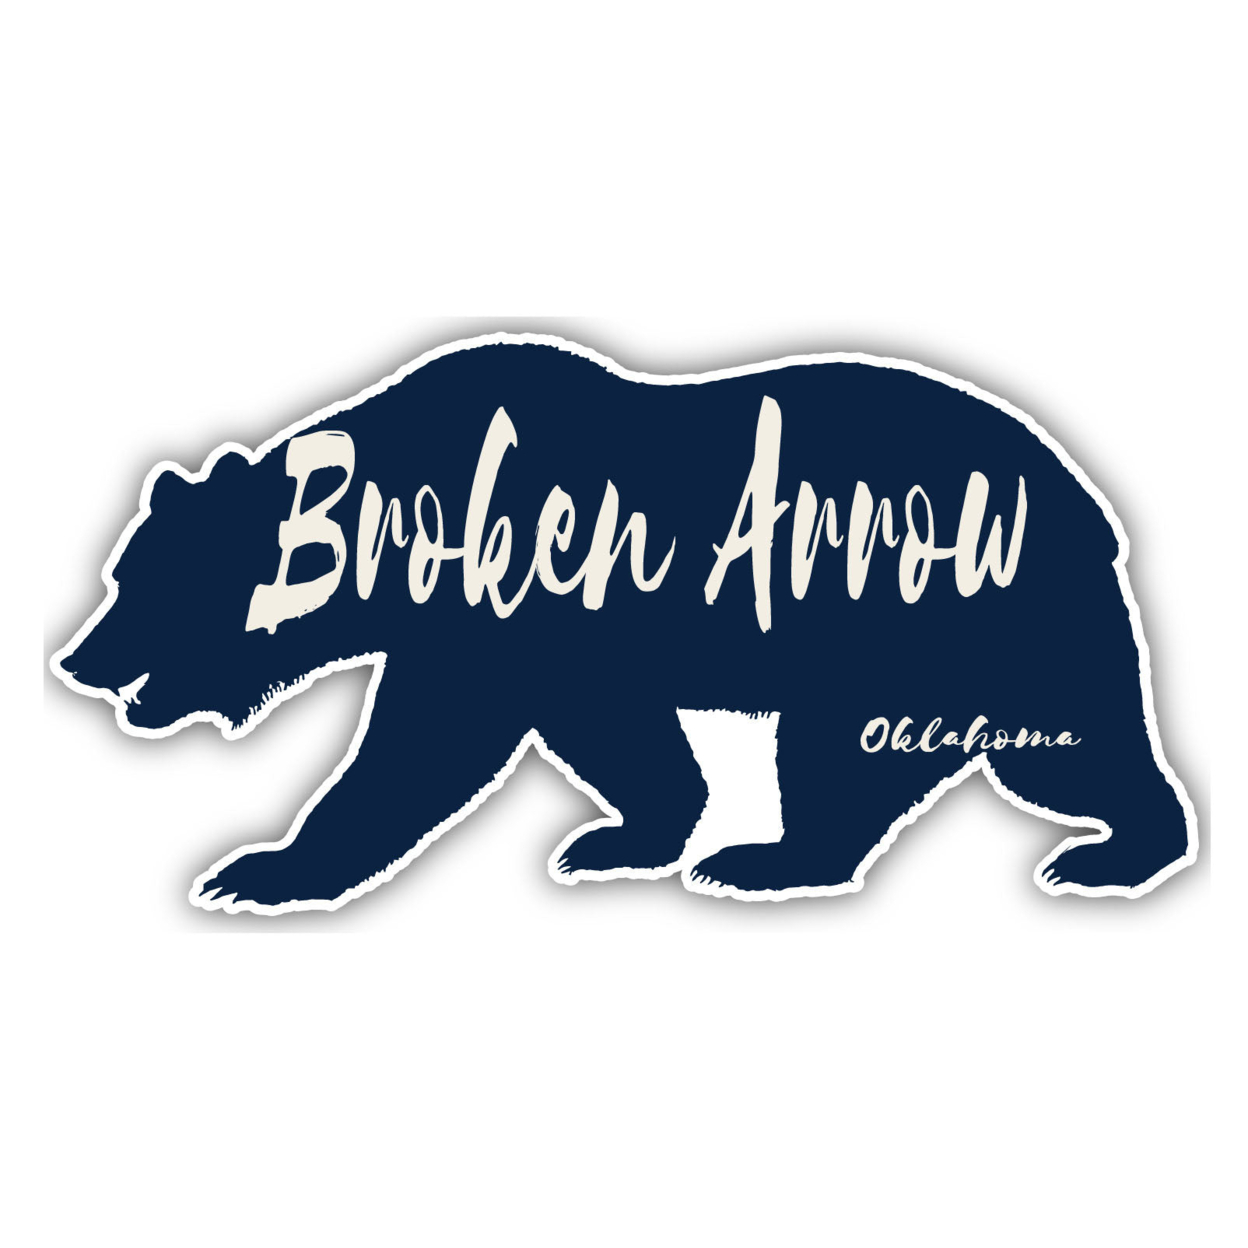 Broken Arrow Oklahoma Souvenir Decorative Stickers (Choose Theme And Size) - Single Unit, 10-Inch, Bear